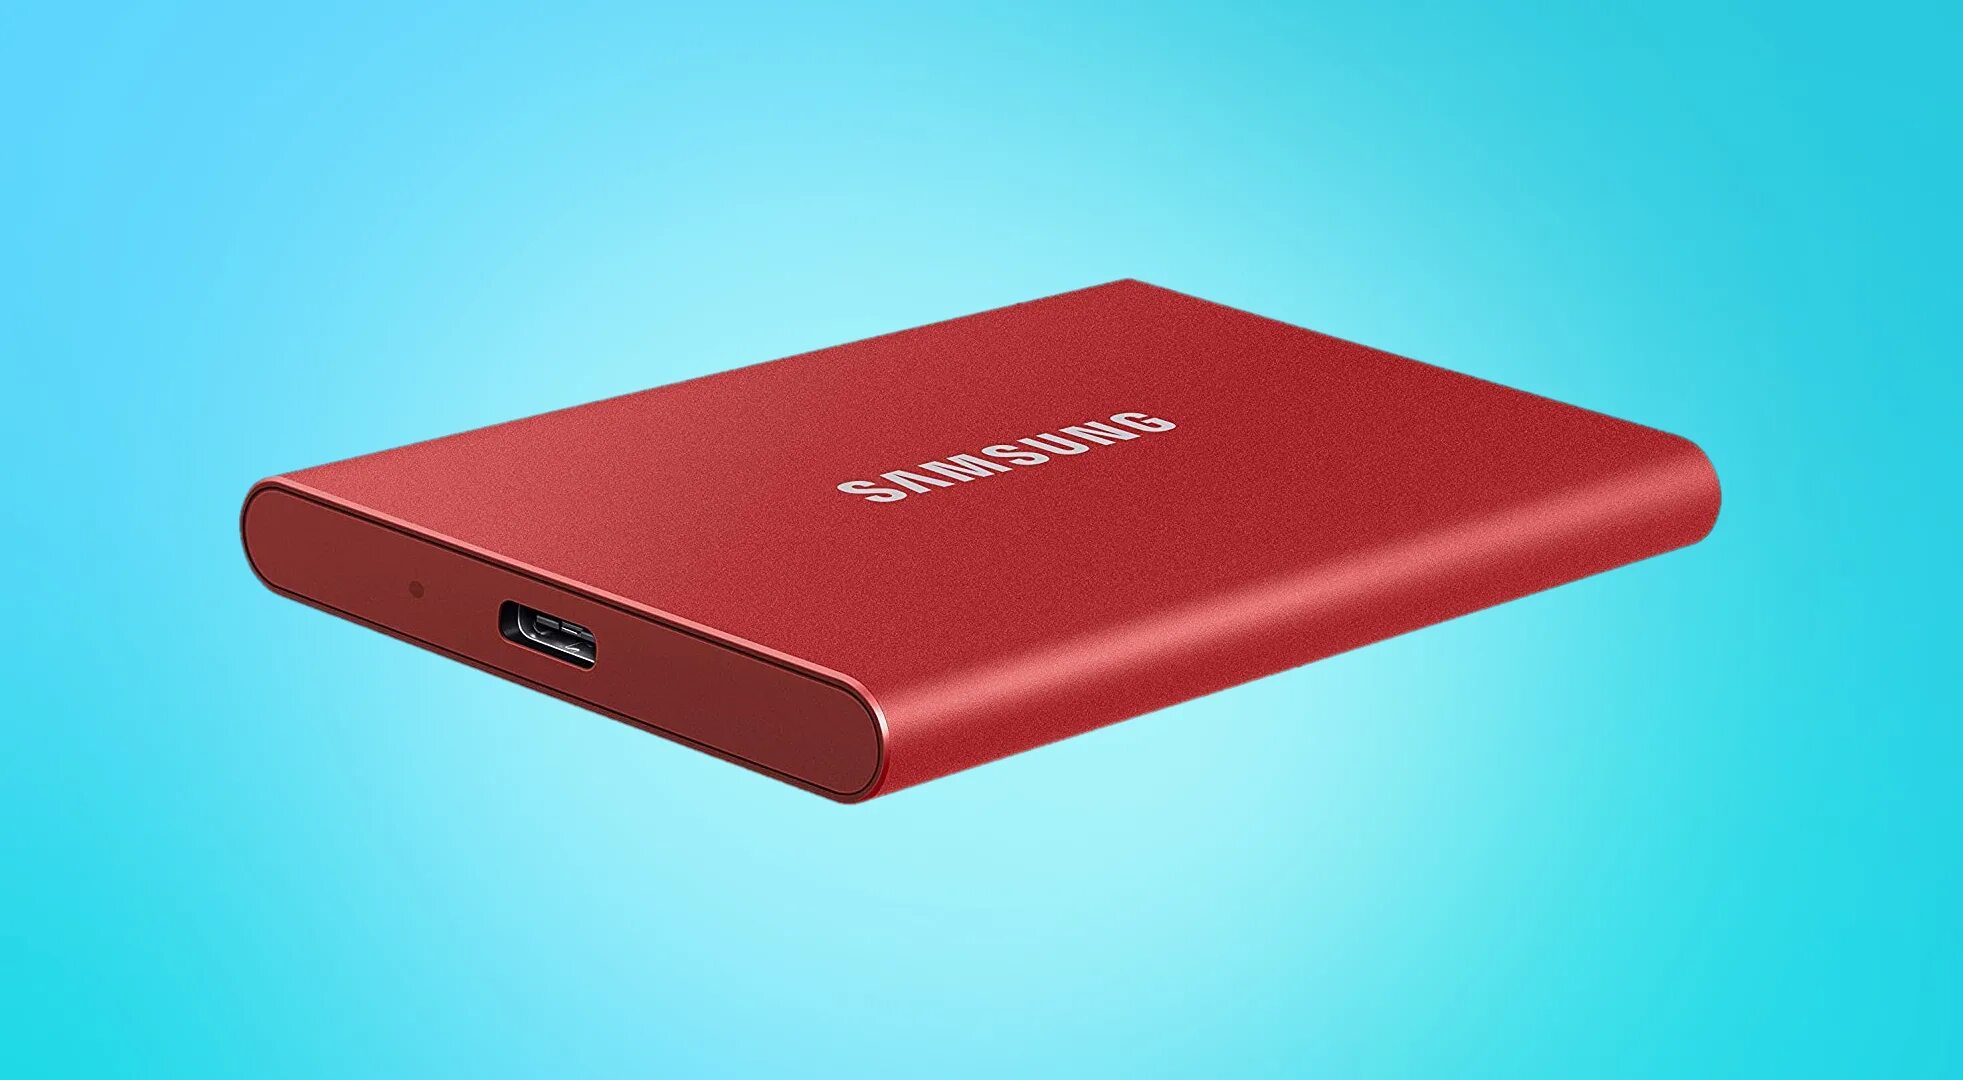 SSD Samsung t7. Samsung External SSD t7. Samsung t7 Portable SSD 2tb. Samsung SSD t7 Red. Samsung t7 купить